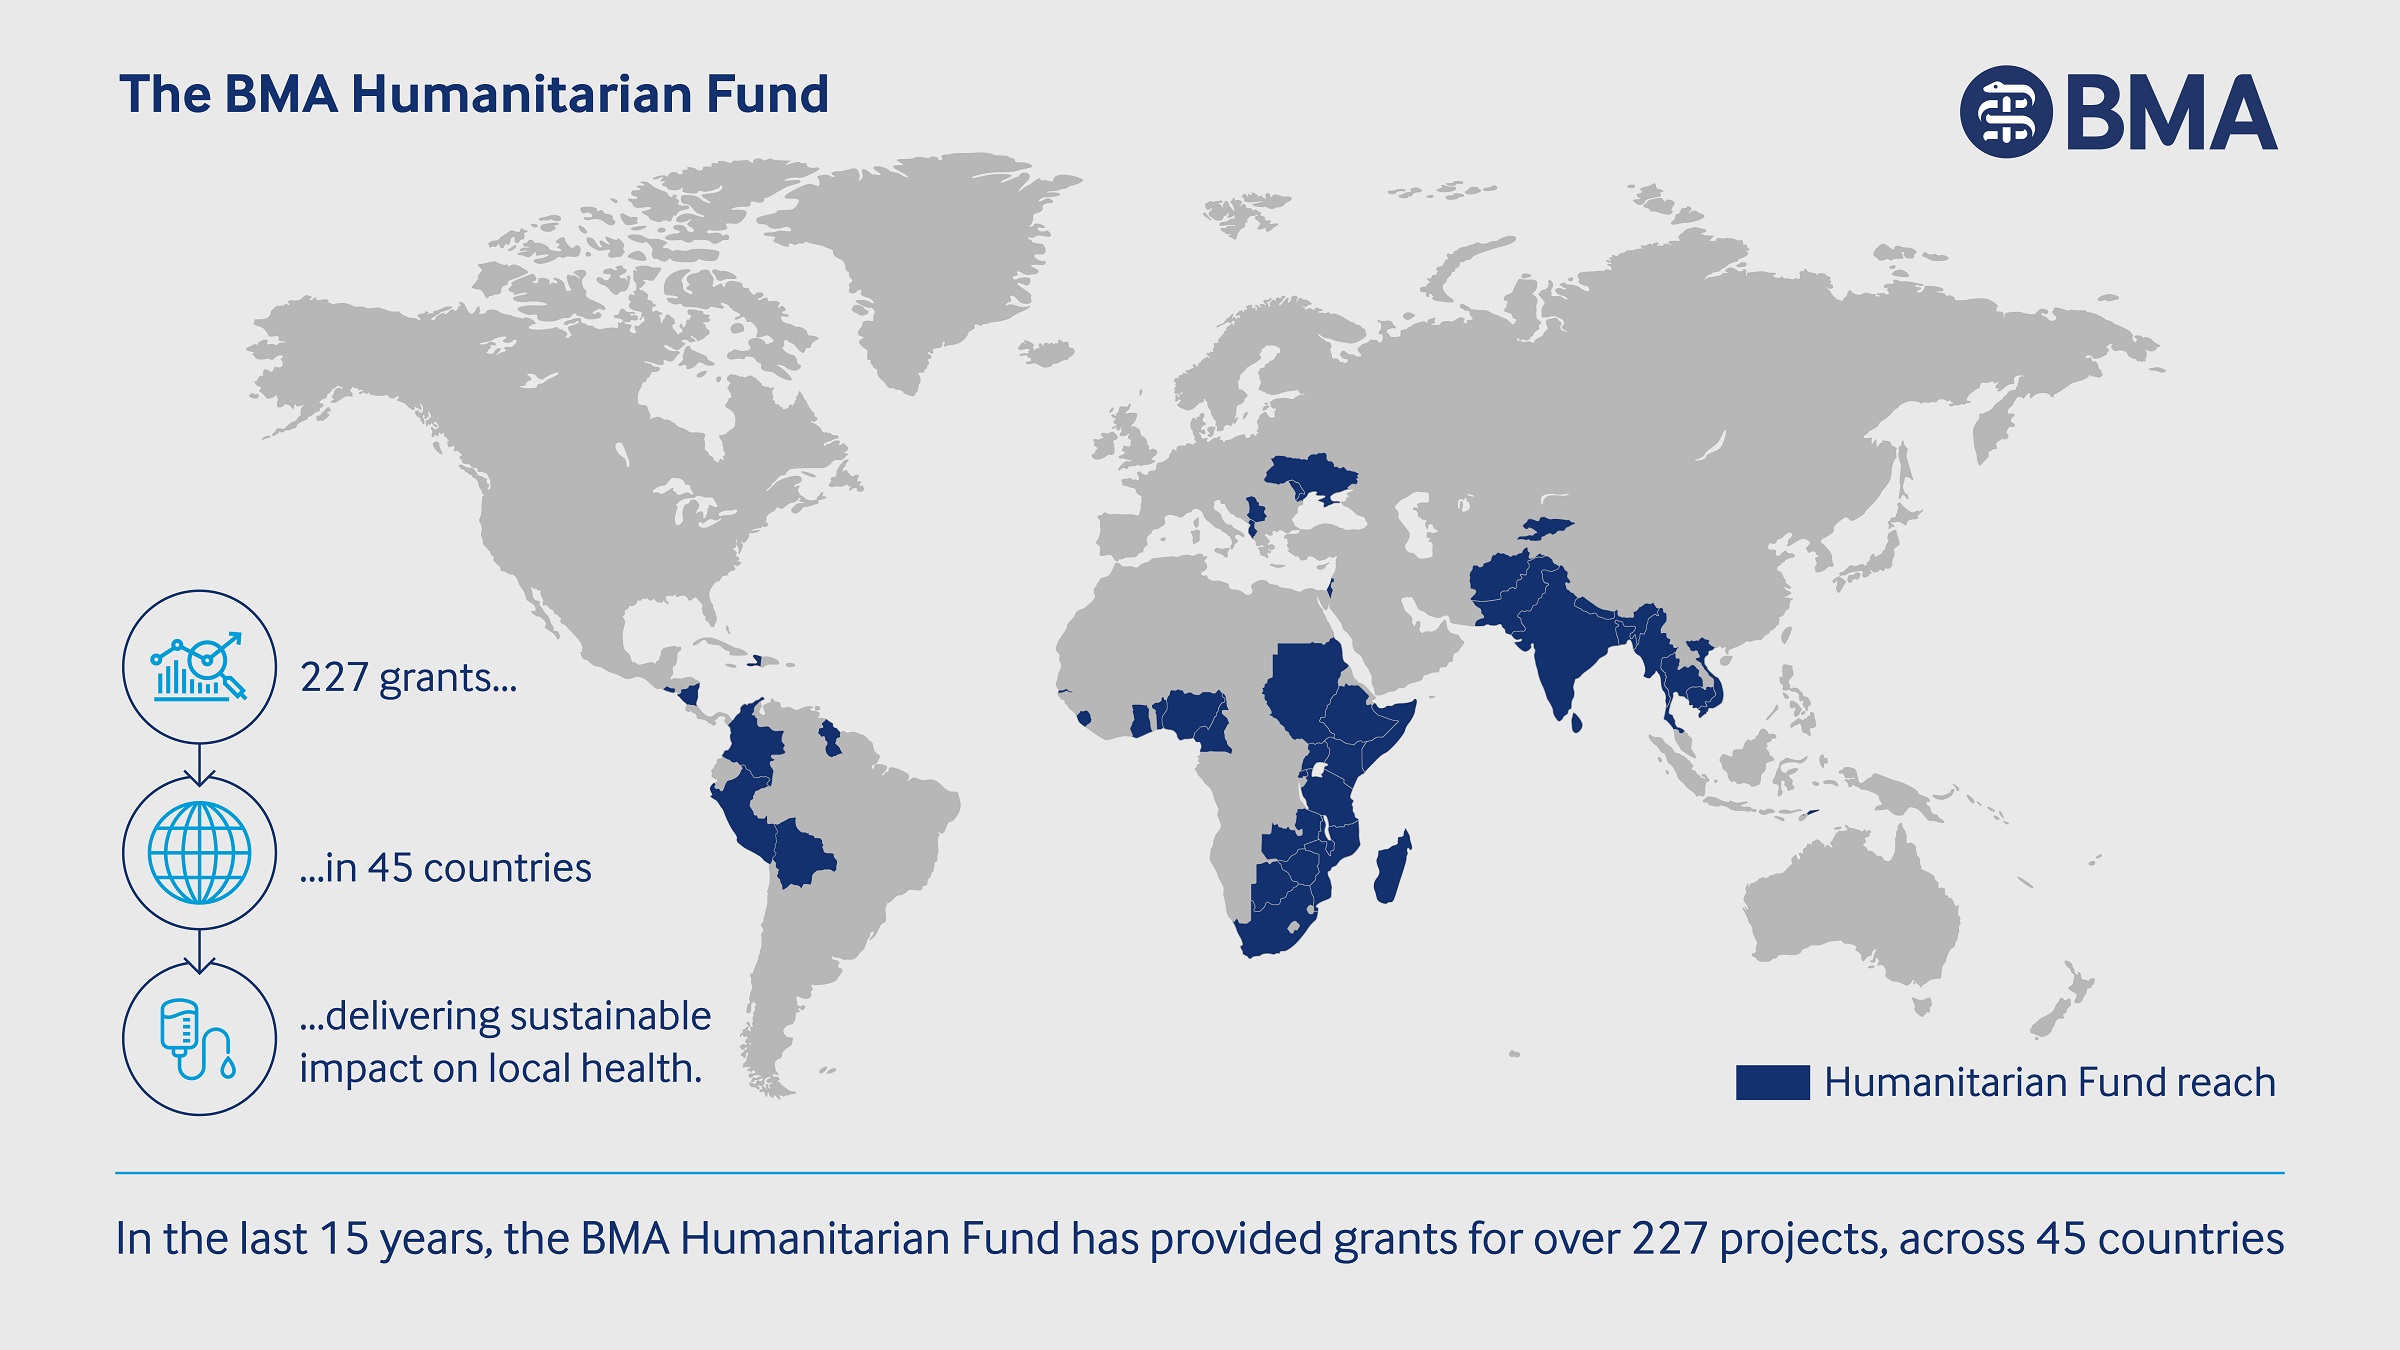 Humanitarian Fund global reach infographic 